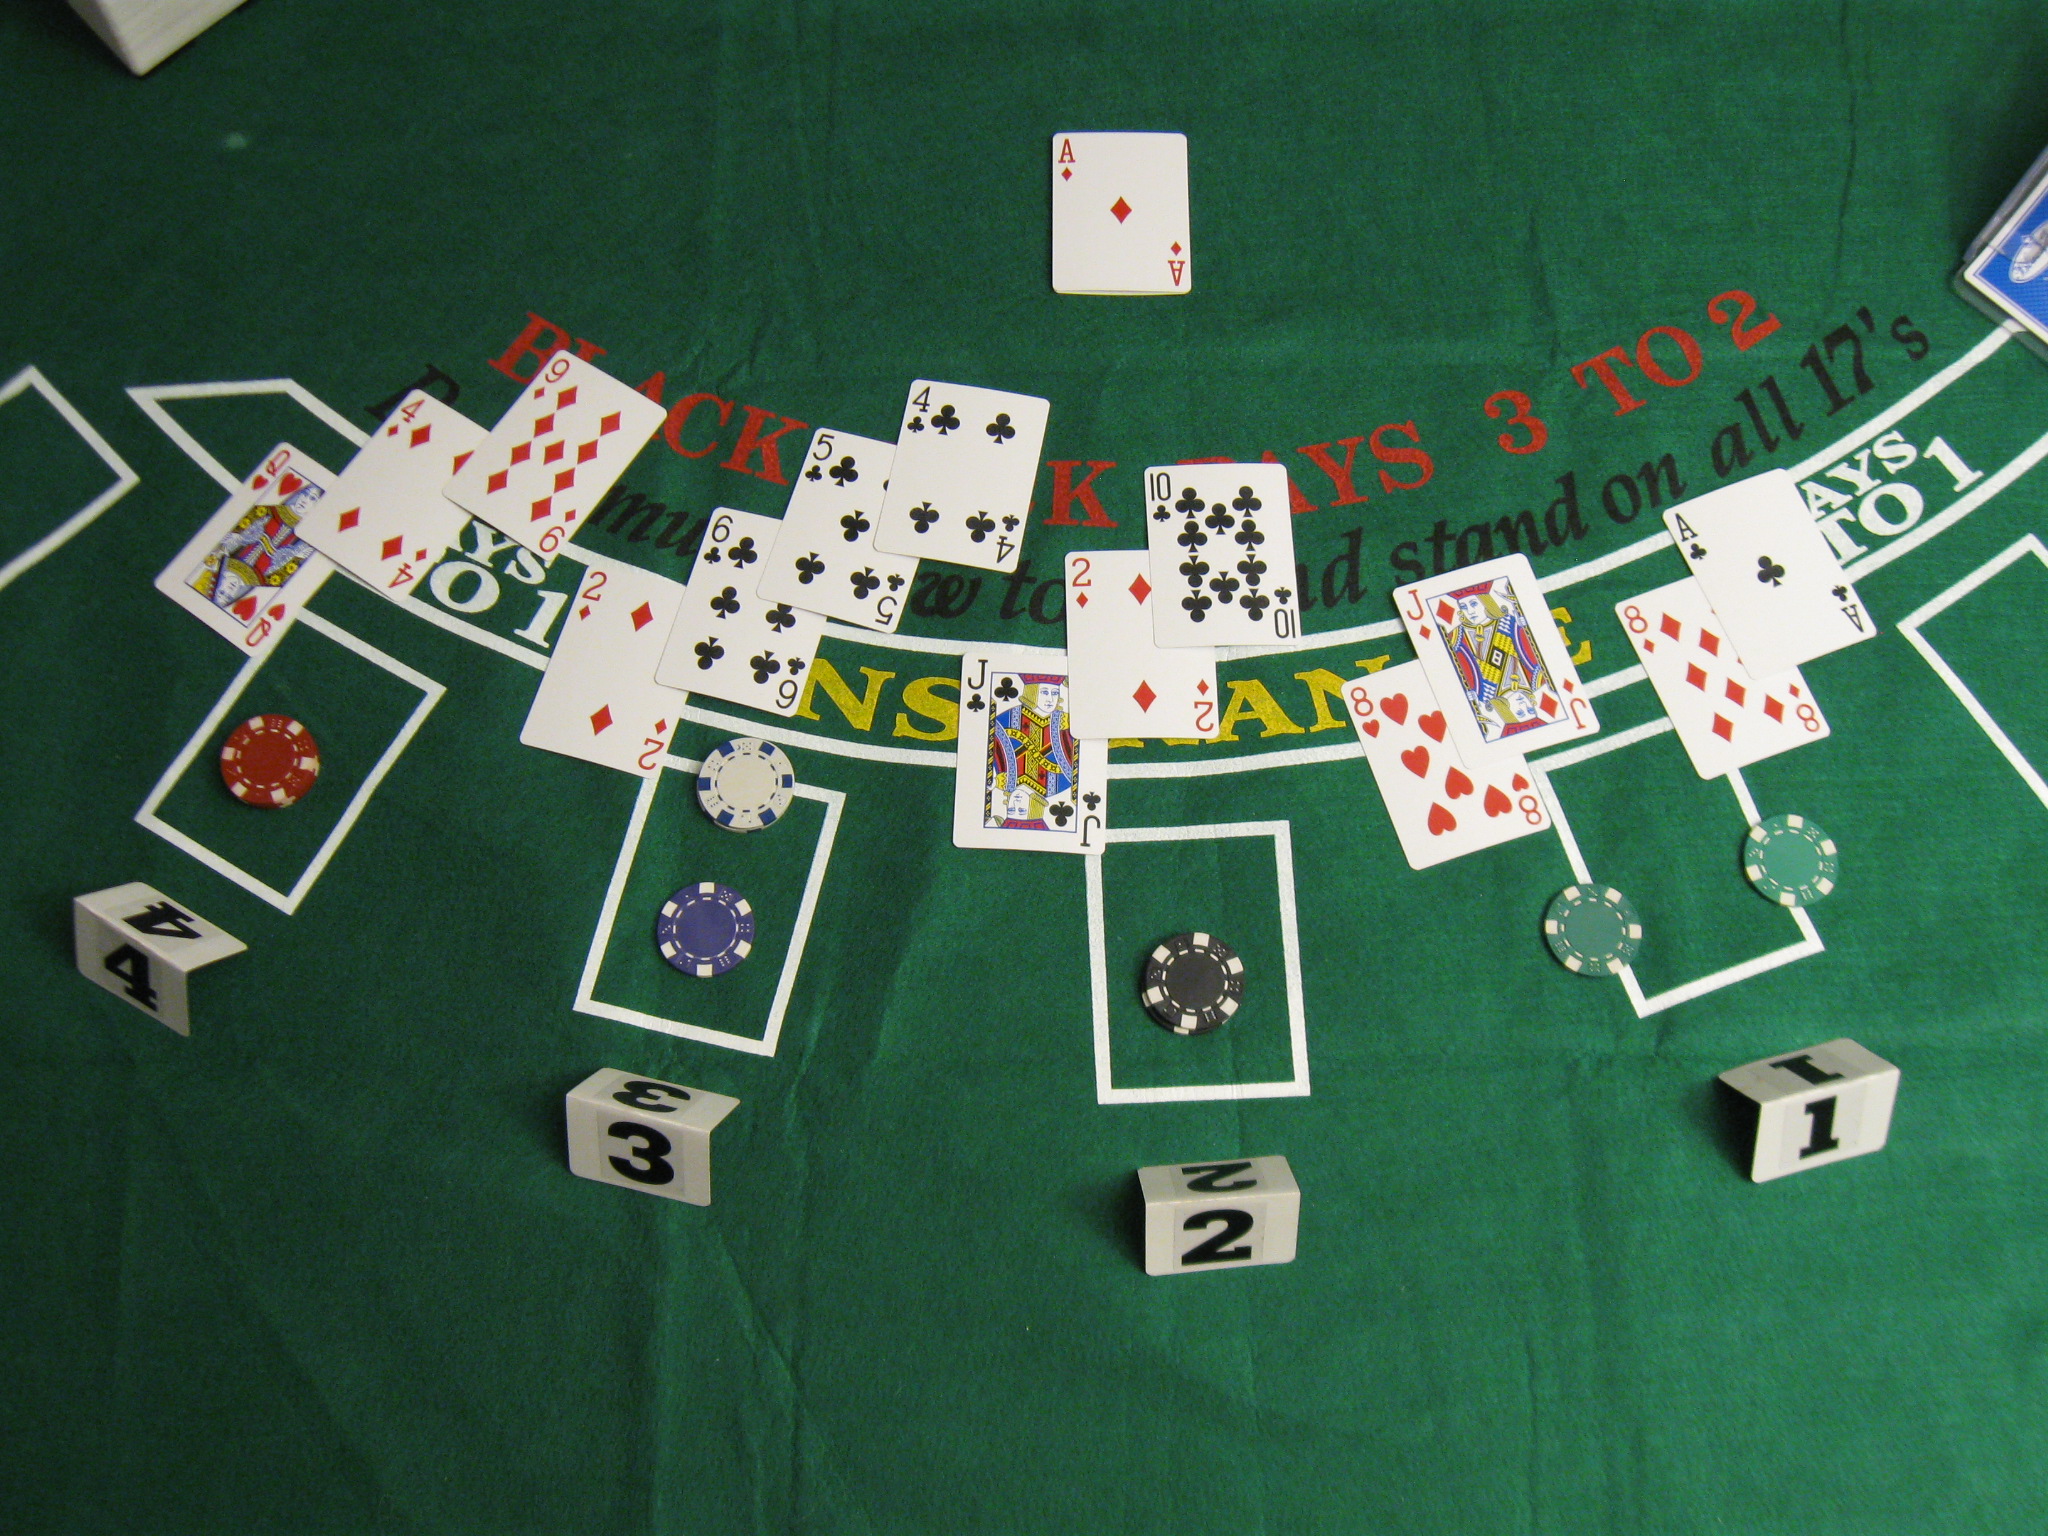 Analyzing Strategies for Maximizing Wins in Blackjack